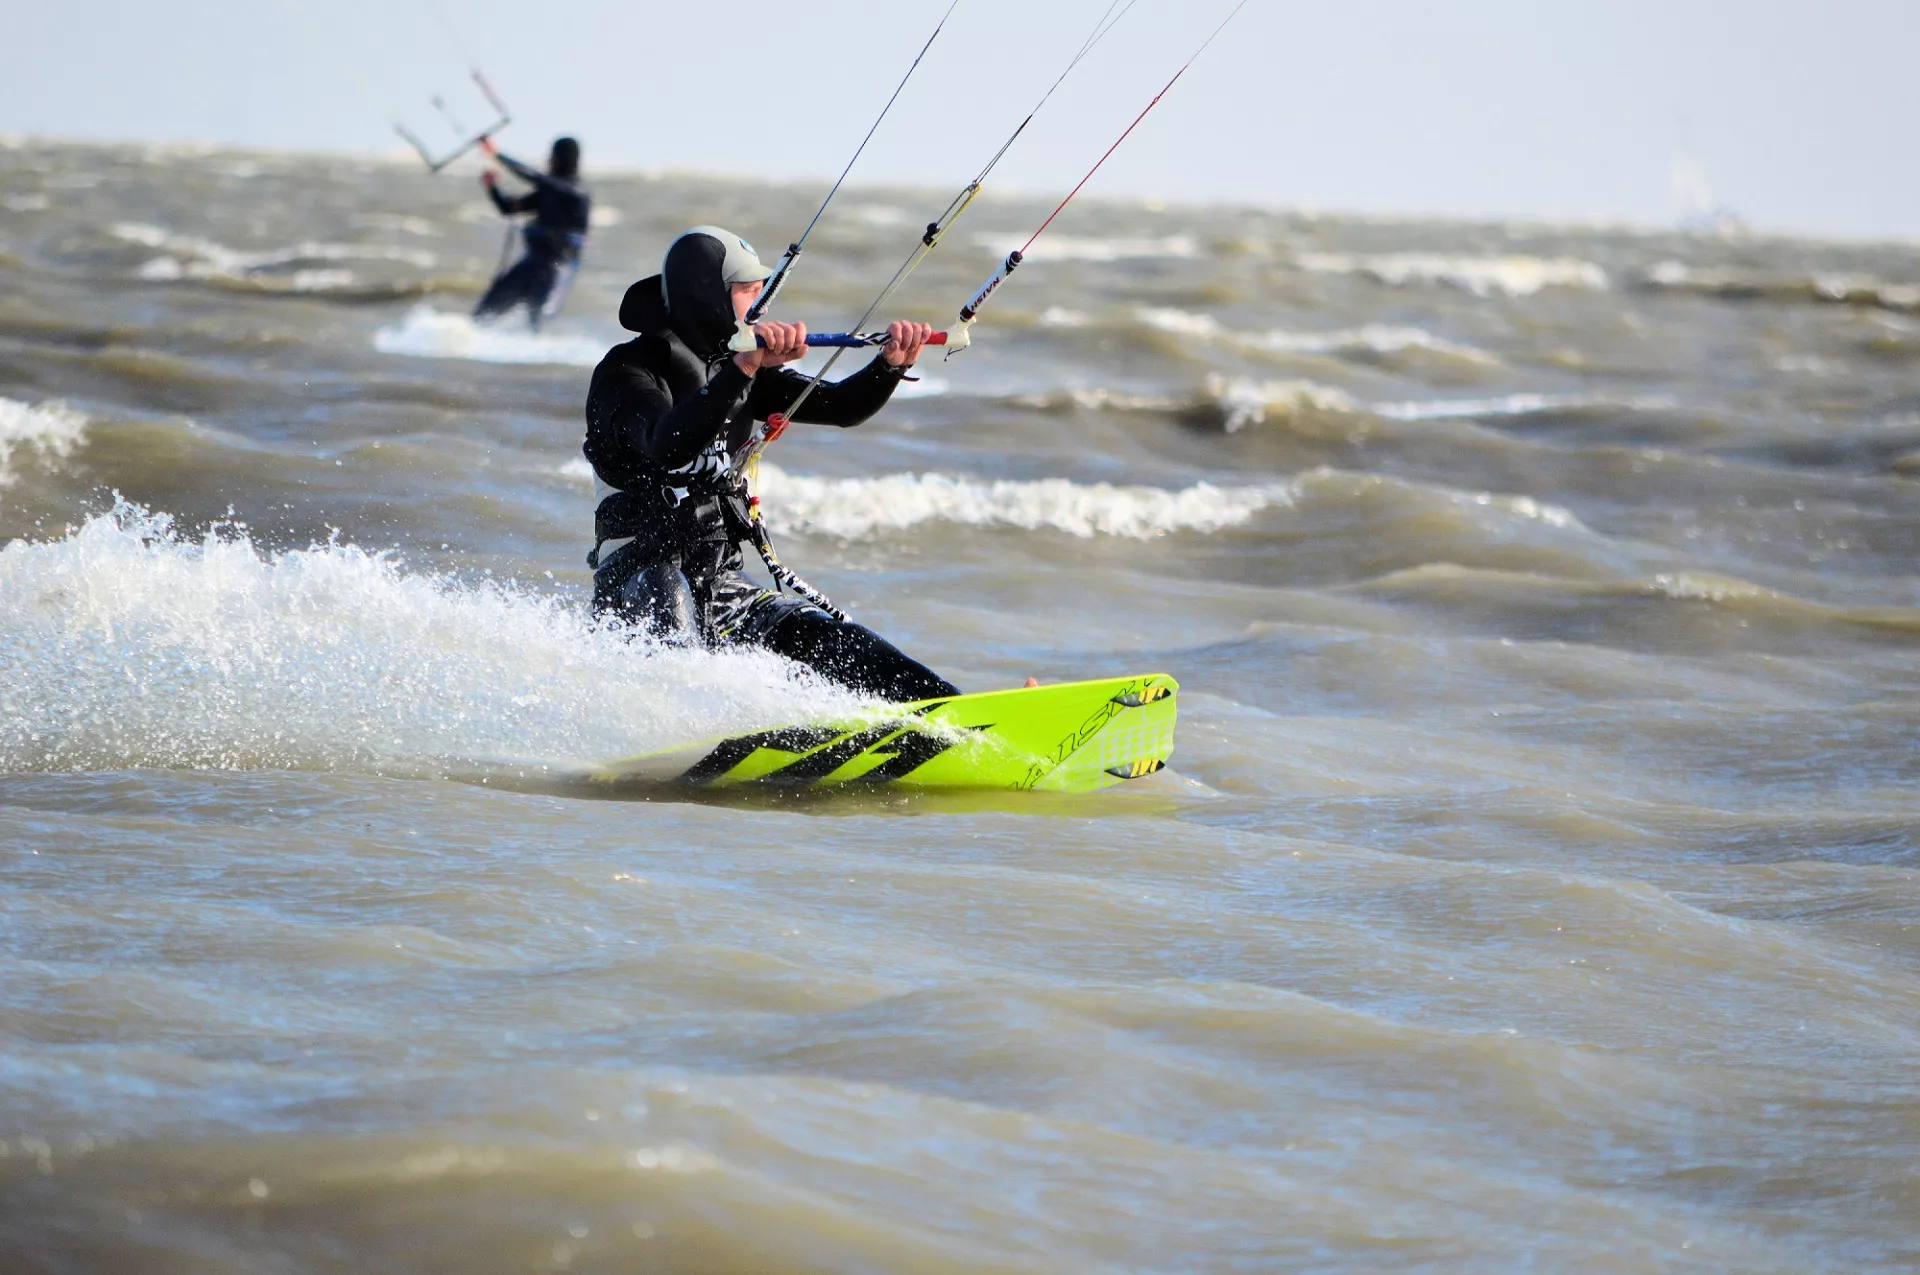 Algarve Watersport Kite- Surf- Windsurf School and Camp in Portugal, Europe | Surfing,Kitesurfing,Windsurfing - Rated 2.5